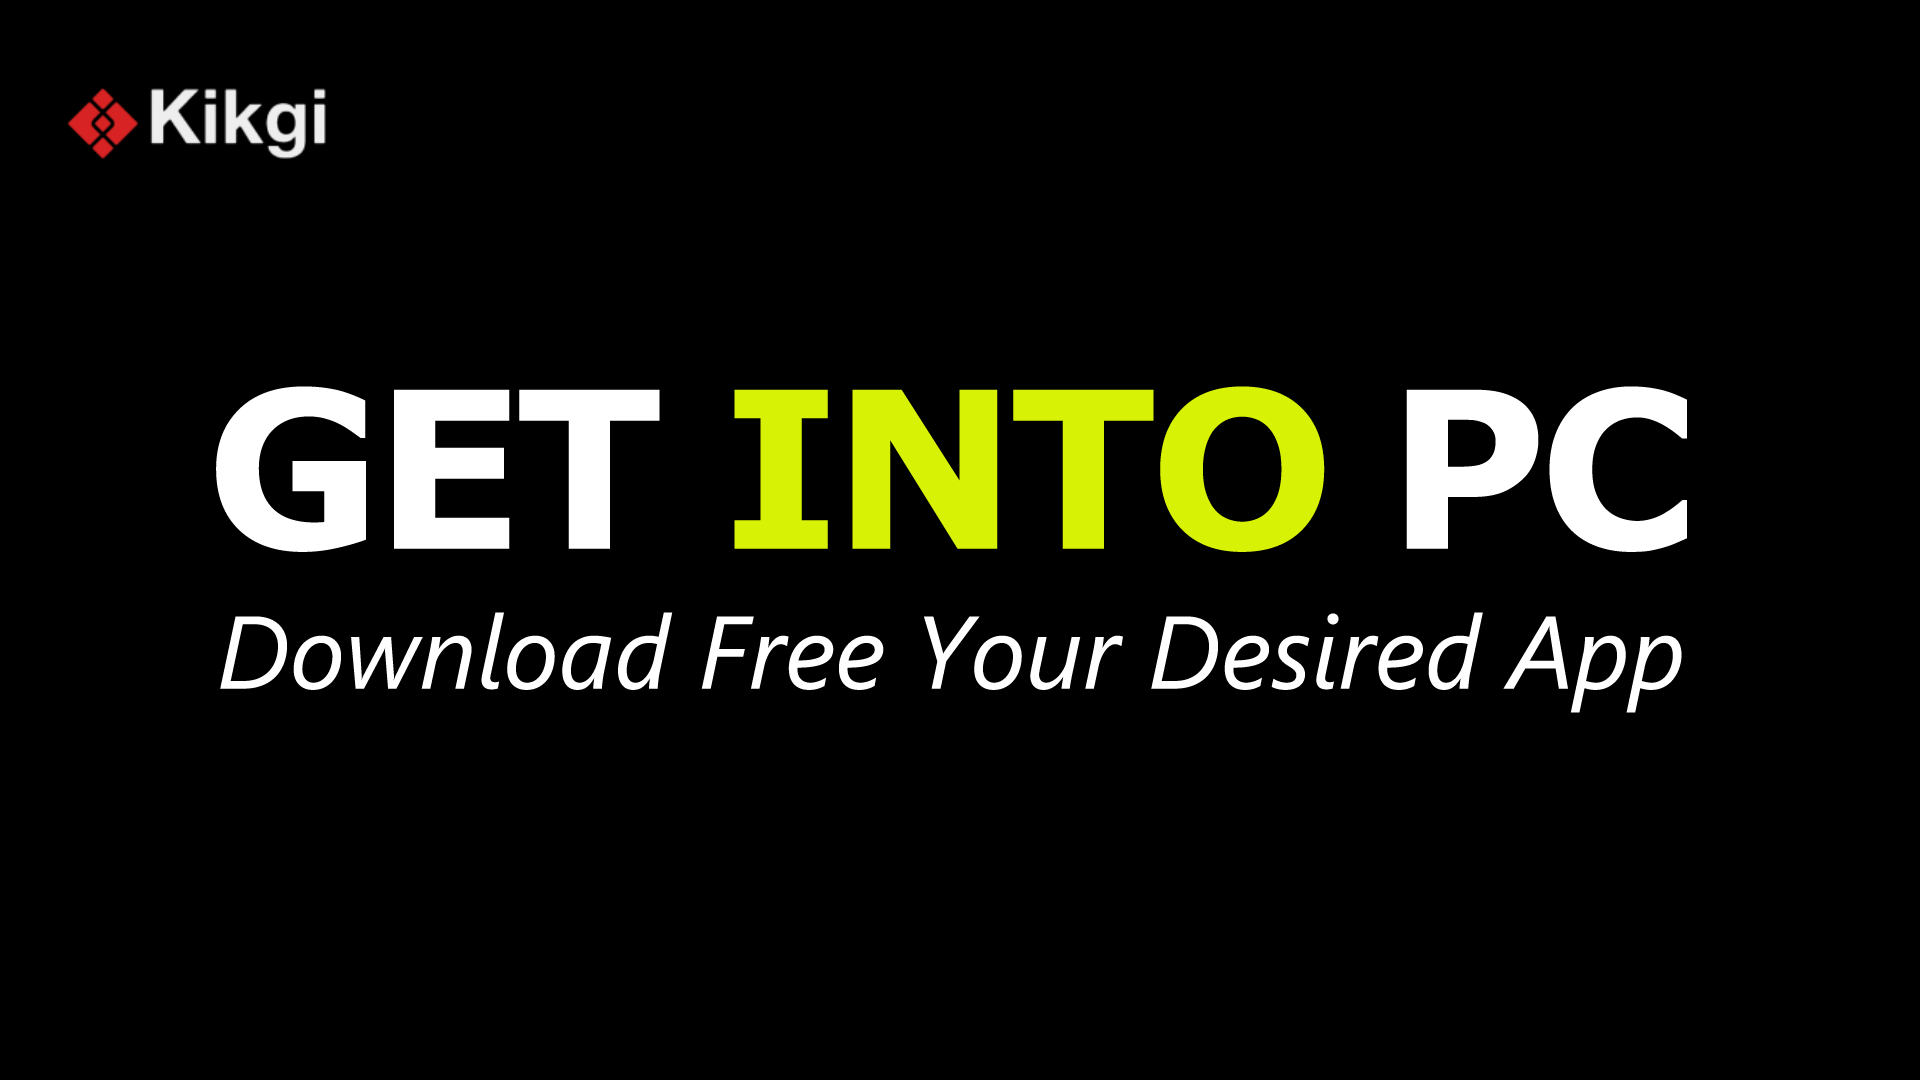 Get Into PC Download Free getintopc.com